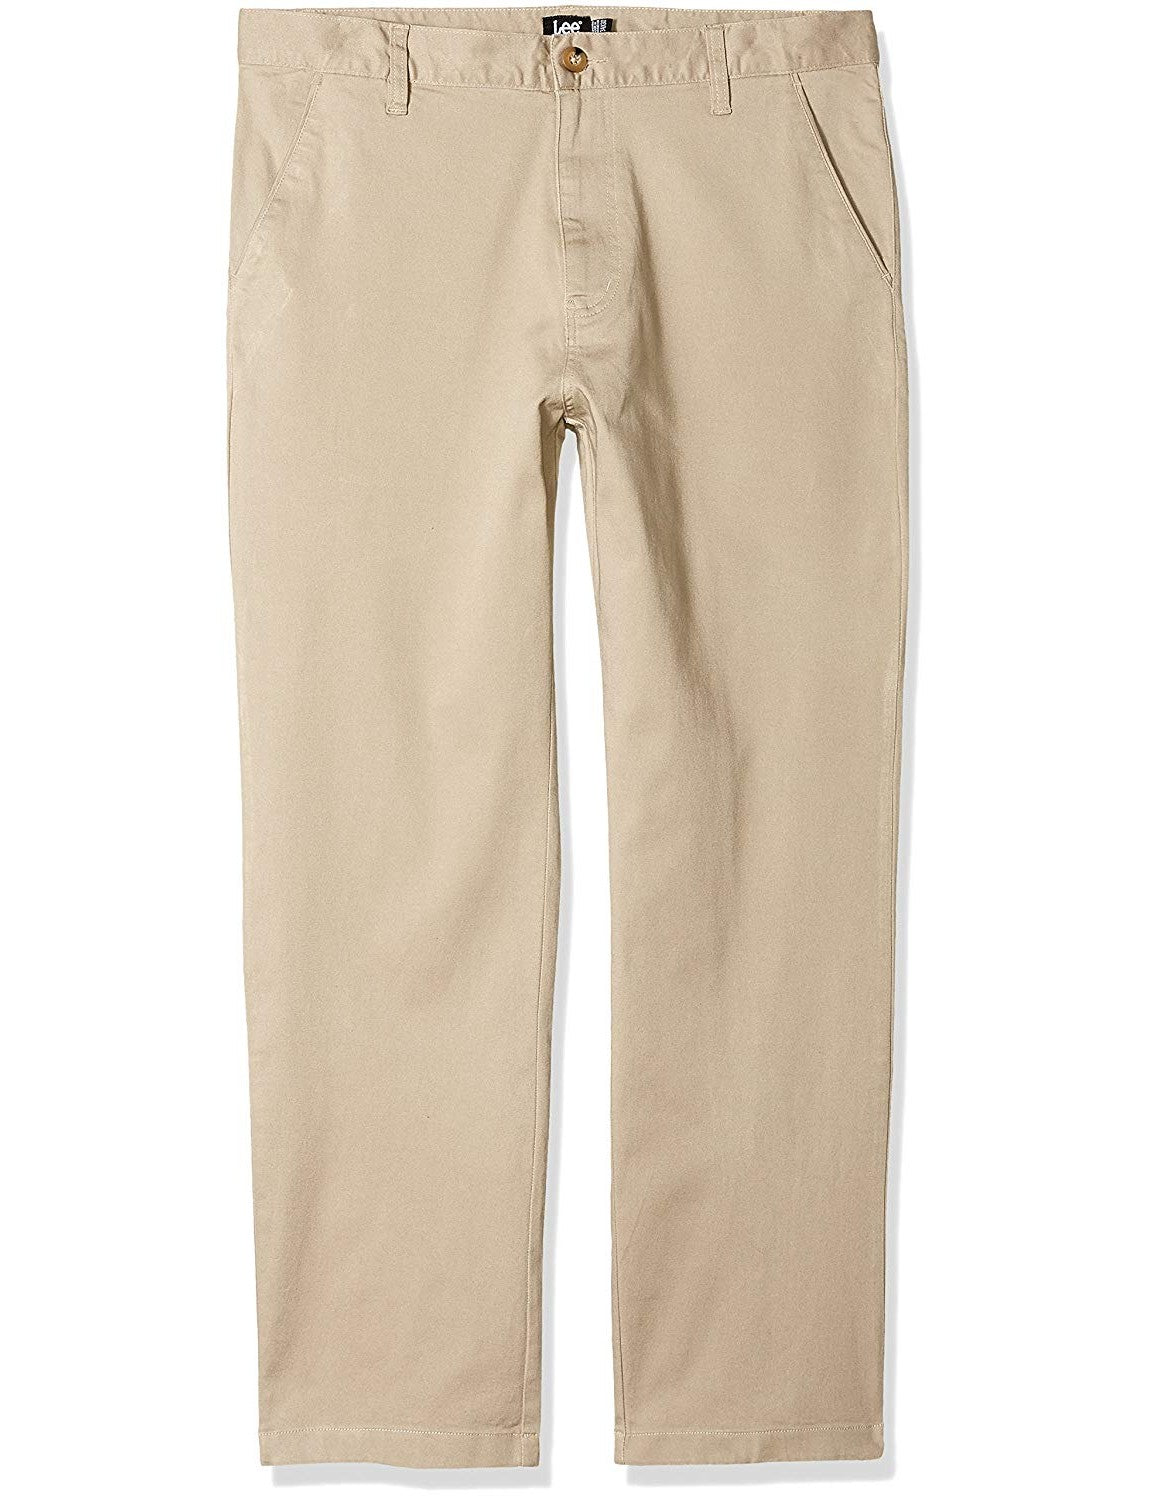 Men's Lee Performance Series Extreme Comfort Khaki Slim-Fit Flat-Front Pants  Navy - Walmart.com